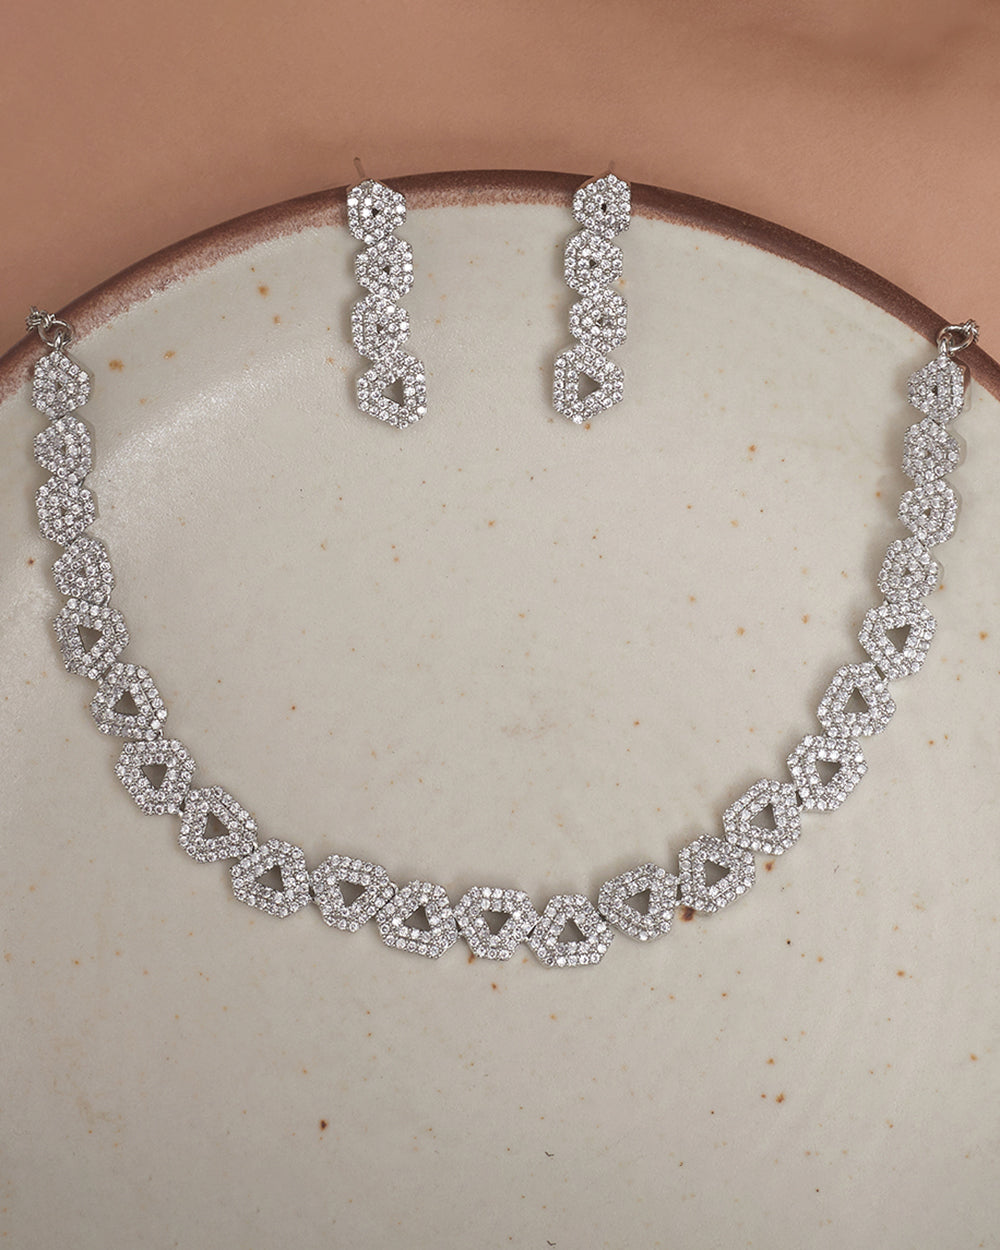 Women's Edgy Triangles Pattern Cz Embellished Silver Jewellery Set - Voylla